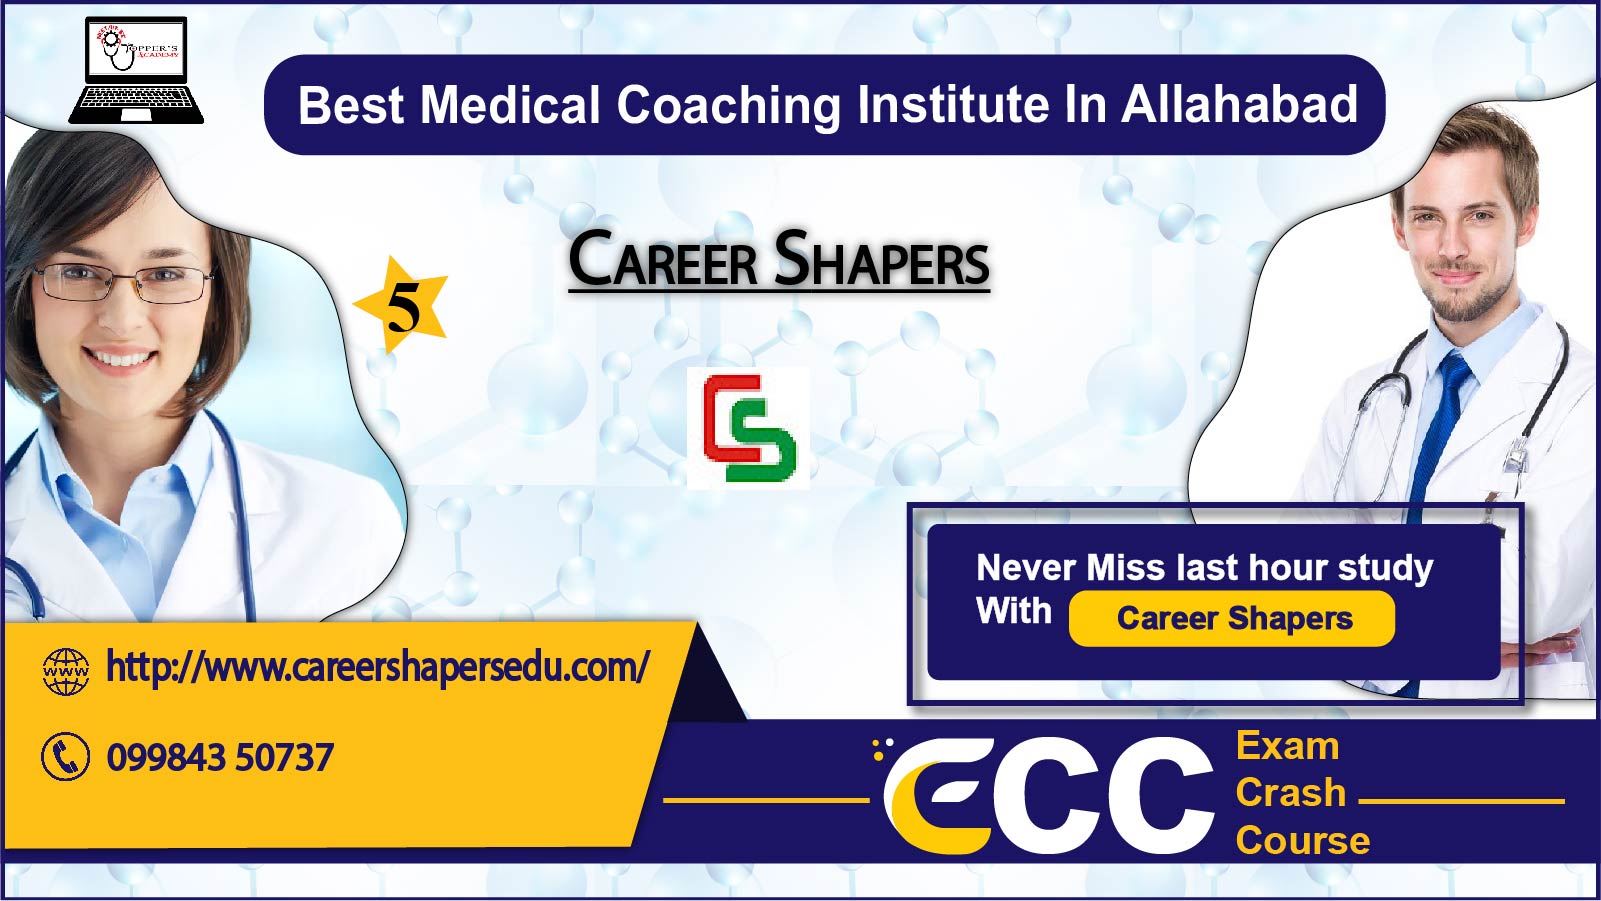 Career Shapers NEET Coaching in Allahabad